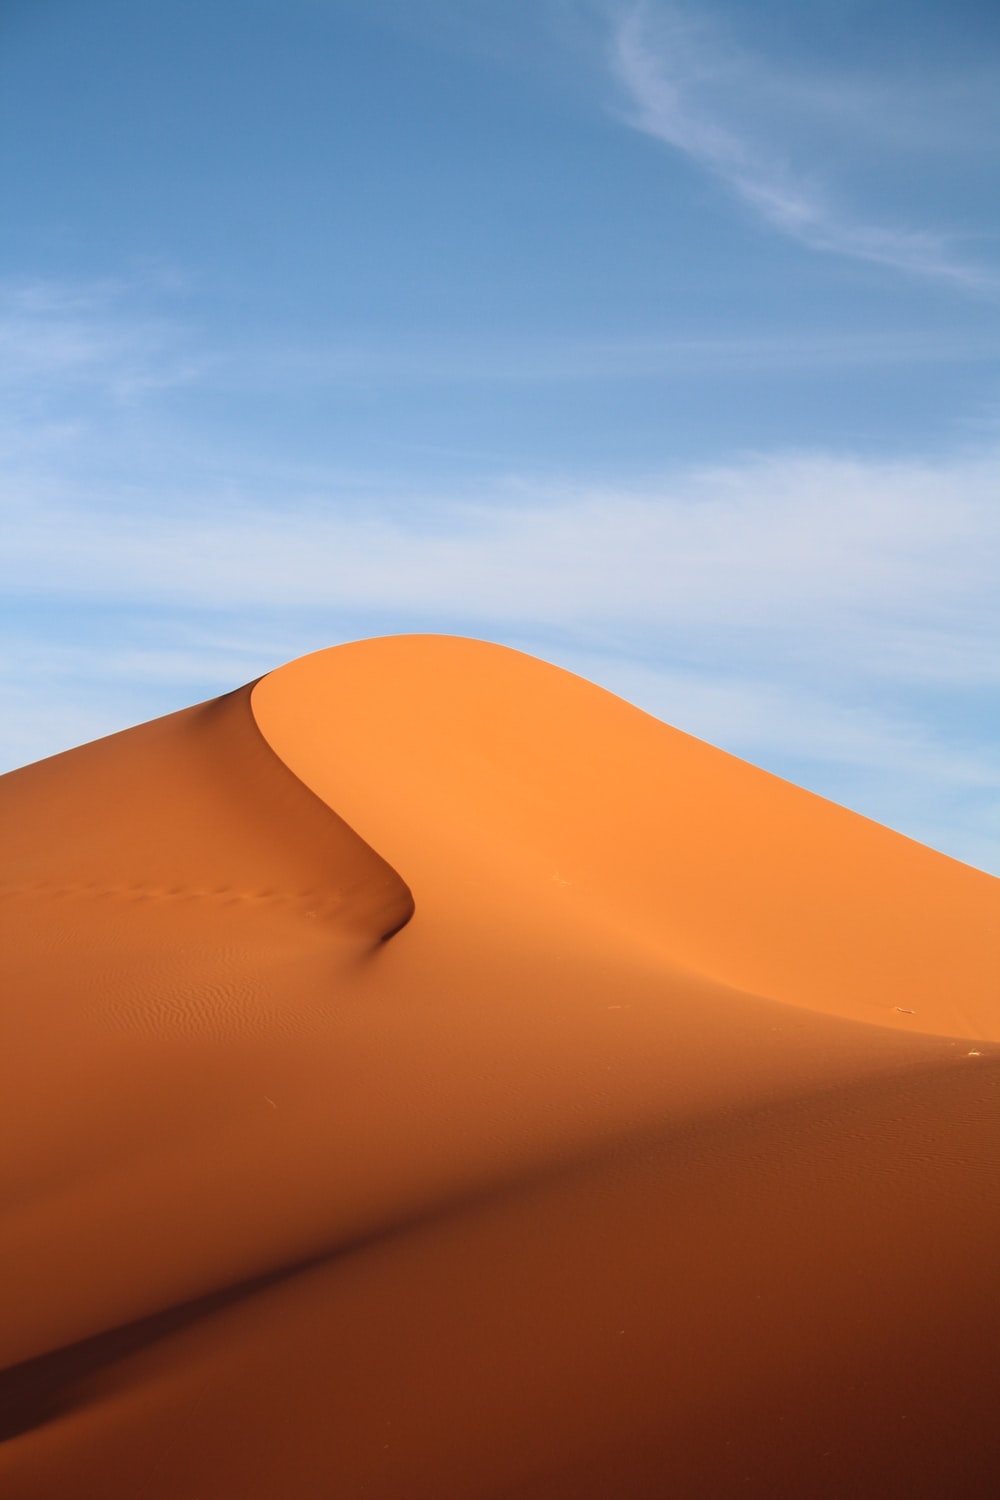 Dubai Desert Picture. Download Free Image